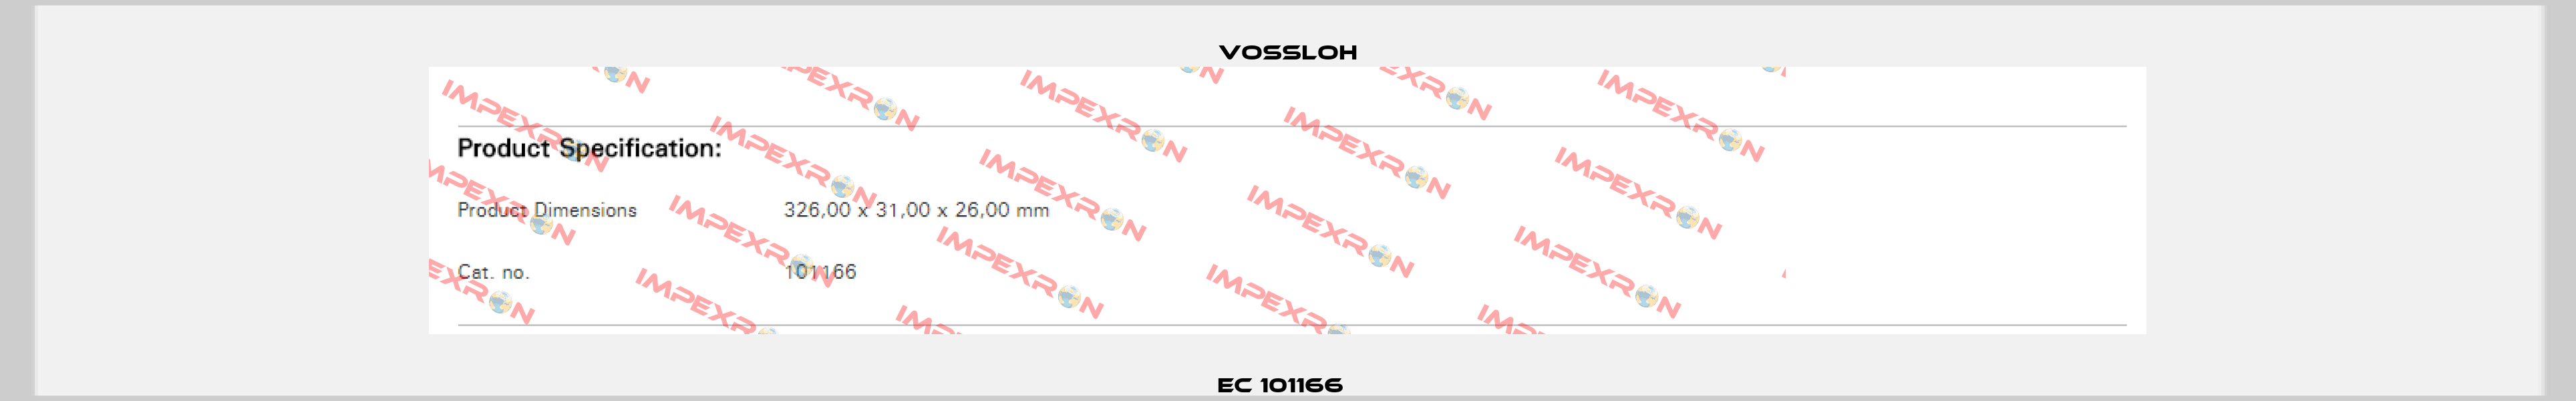 EC 101166   Vossloh